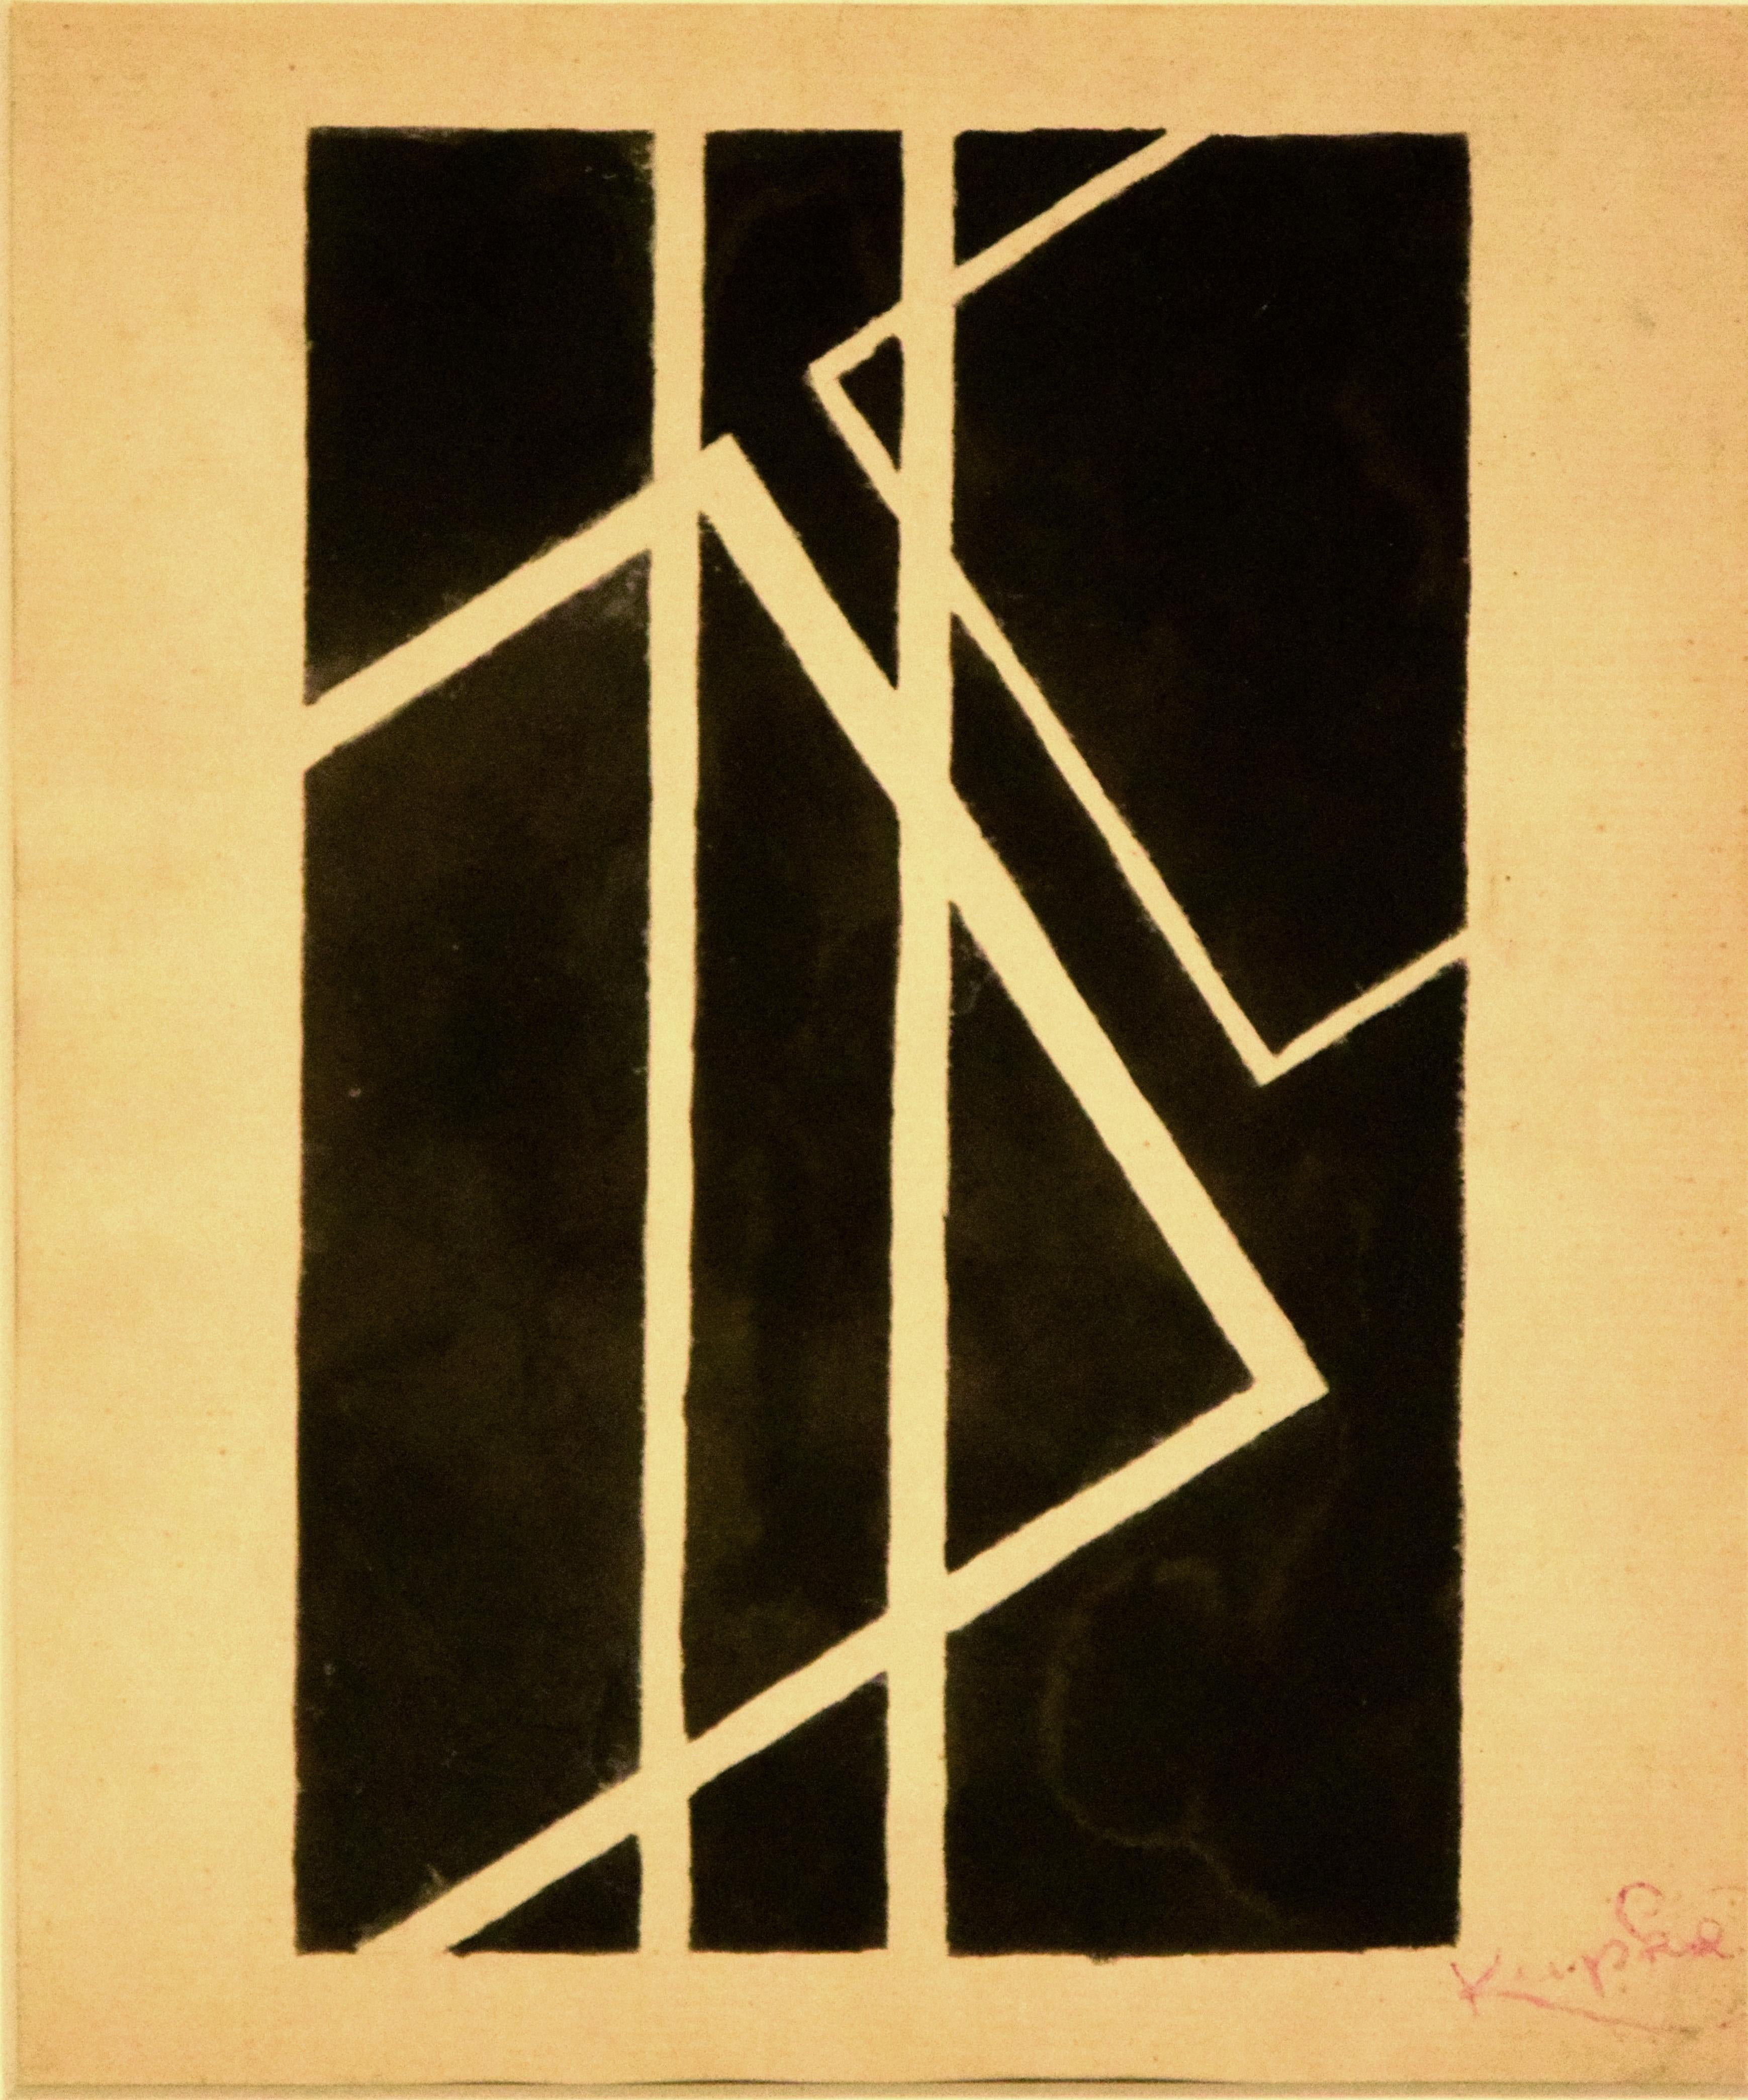 Black Geometrical Composition - China Ink Drawing by F. Kupka  - Art by Frantisek Kupka